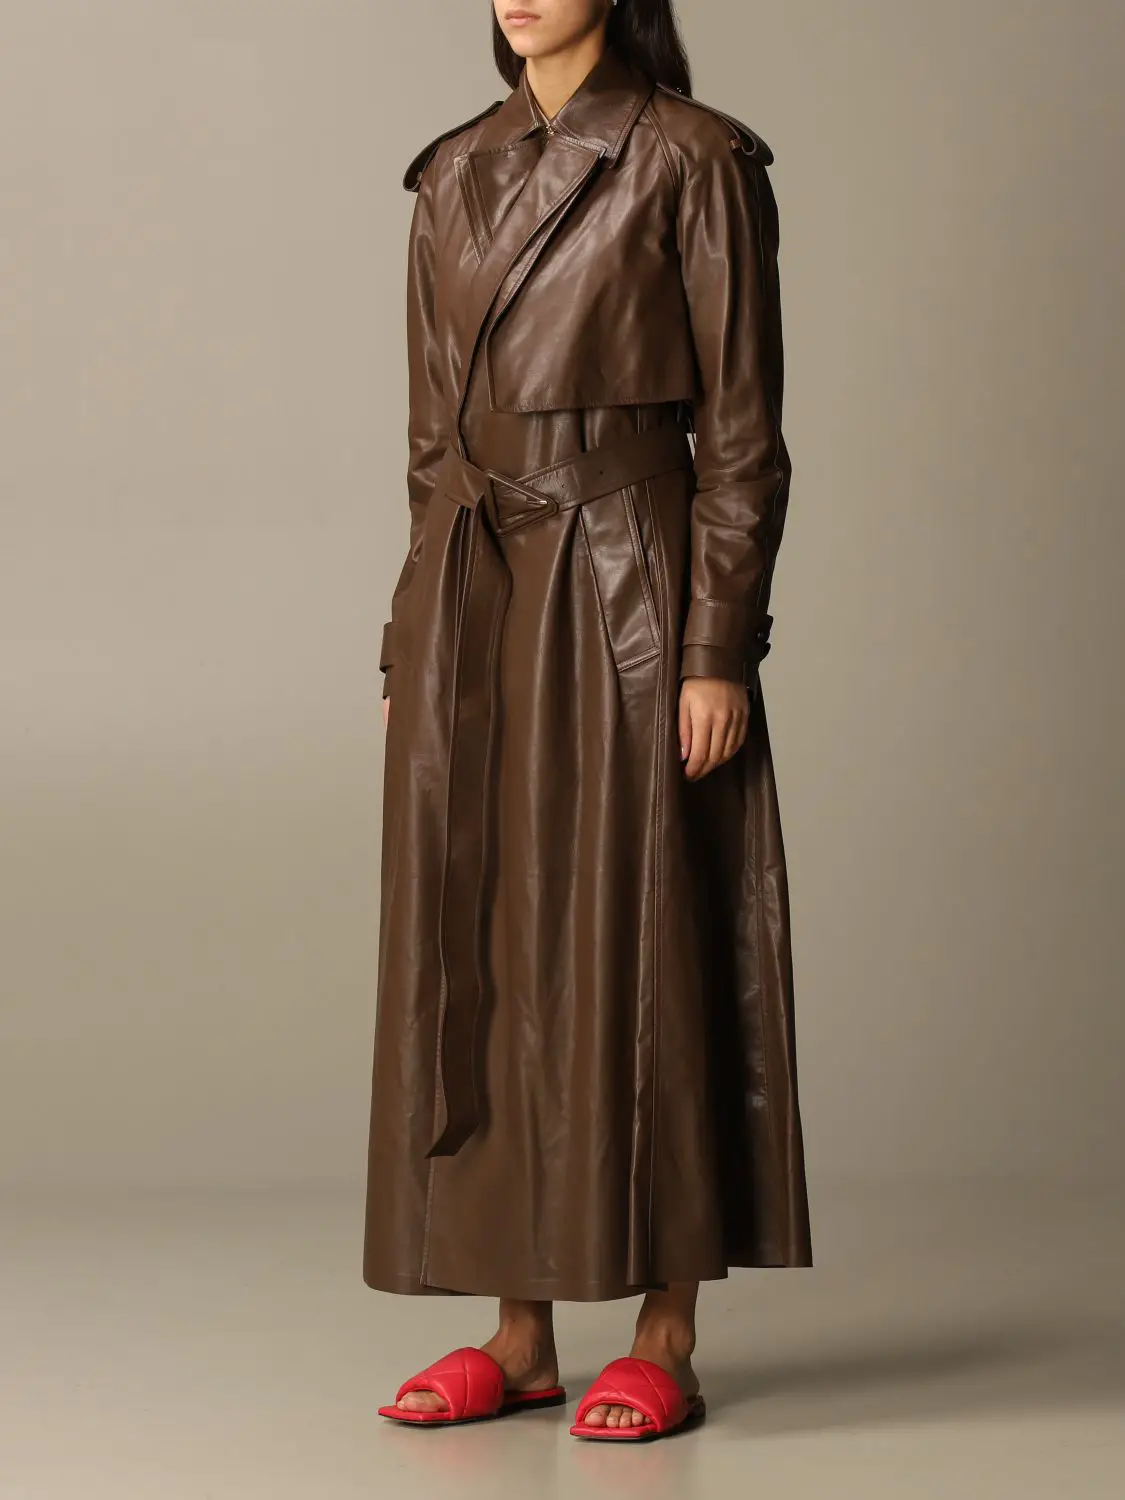 Bottega Venata brown leather trench coat